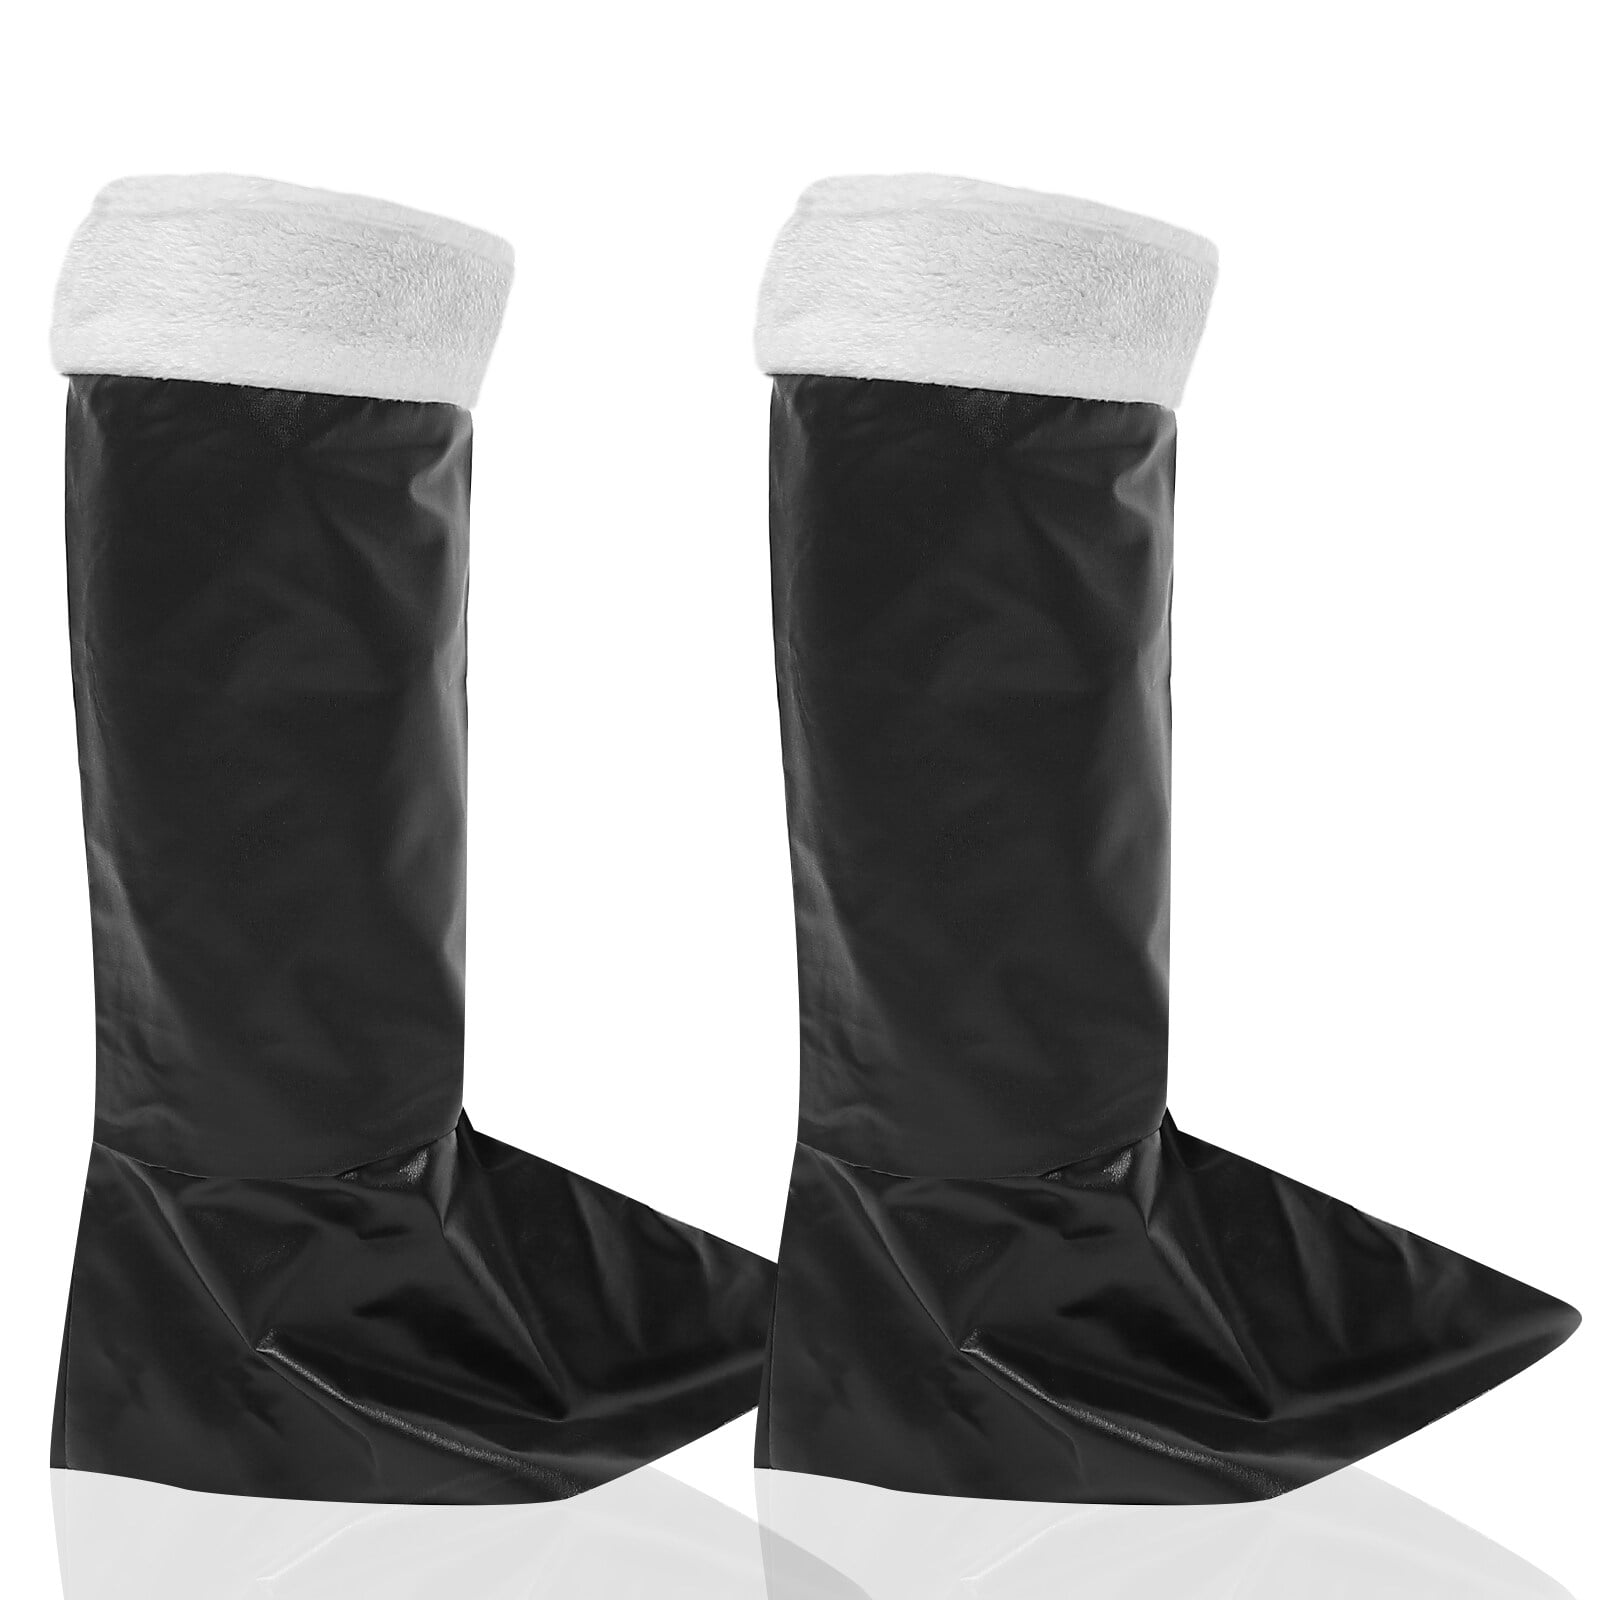 christmas boot covers 1 Pair Xmas Costume Accessories Santa Claus Sock ...